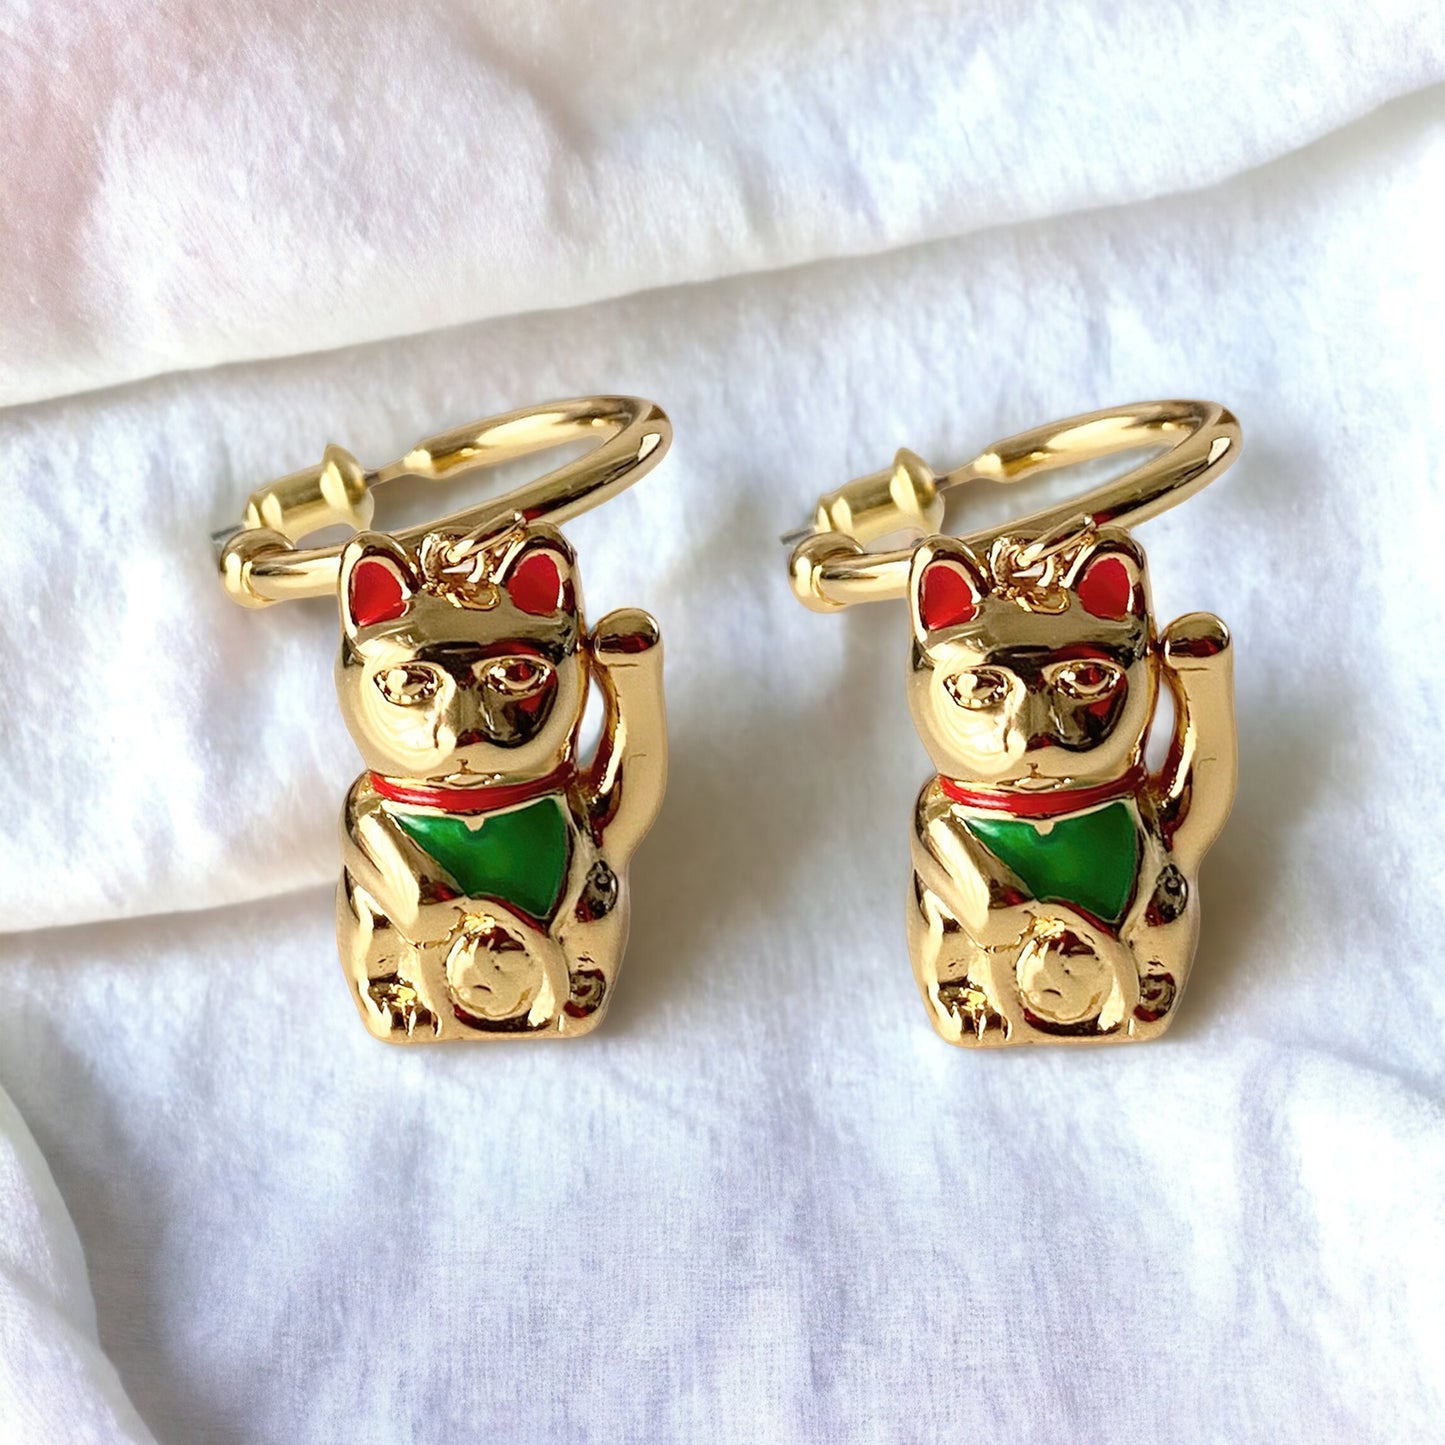 Maneki Neko (Lucky Cat) earrings